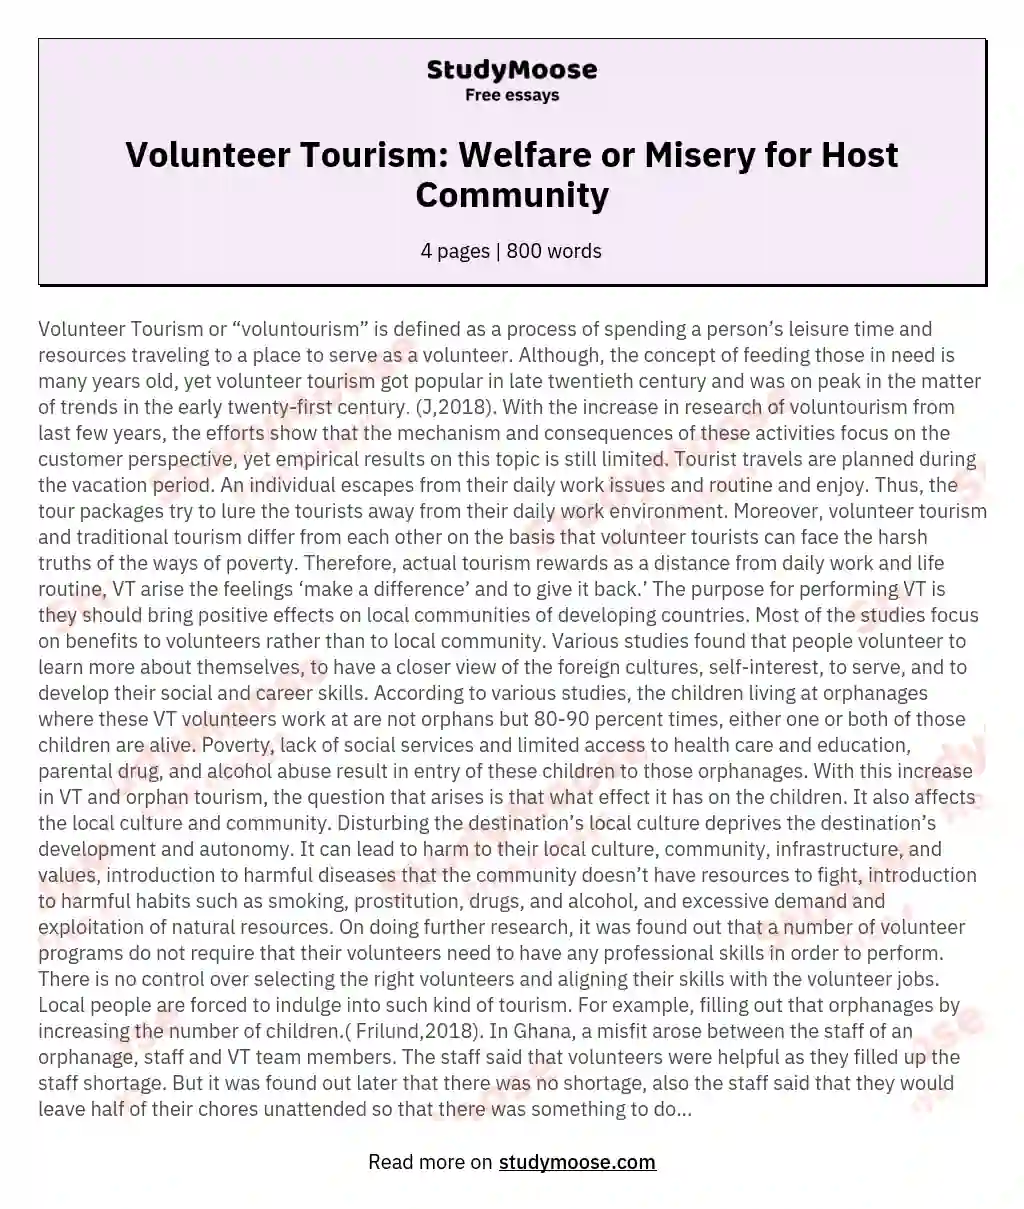 Volunteer Tourism: Welfare or Misery for Host Community